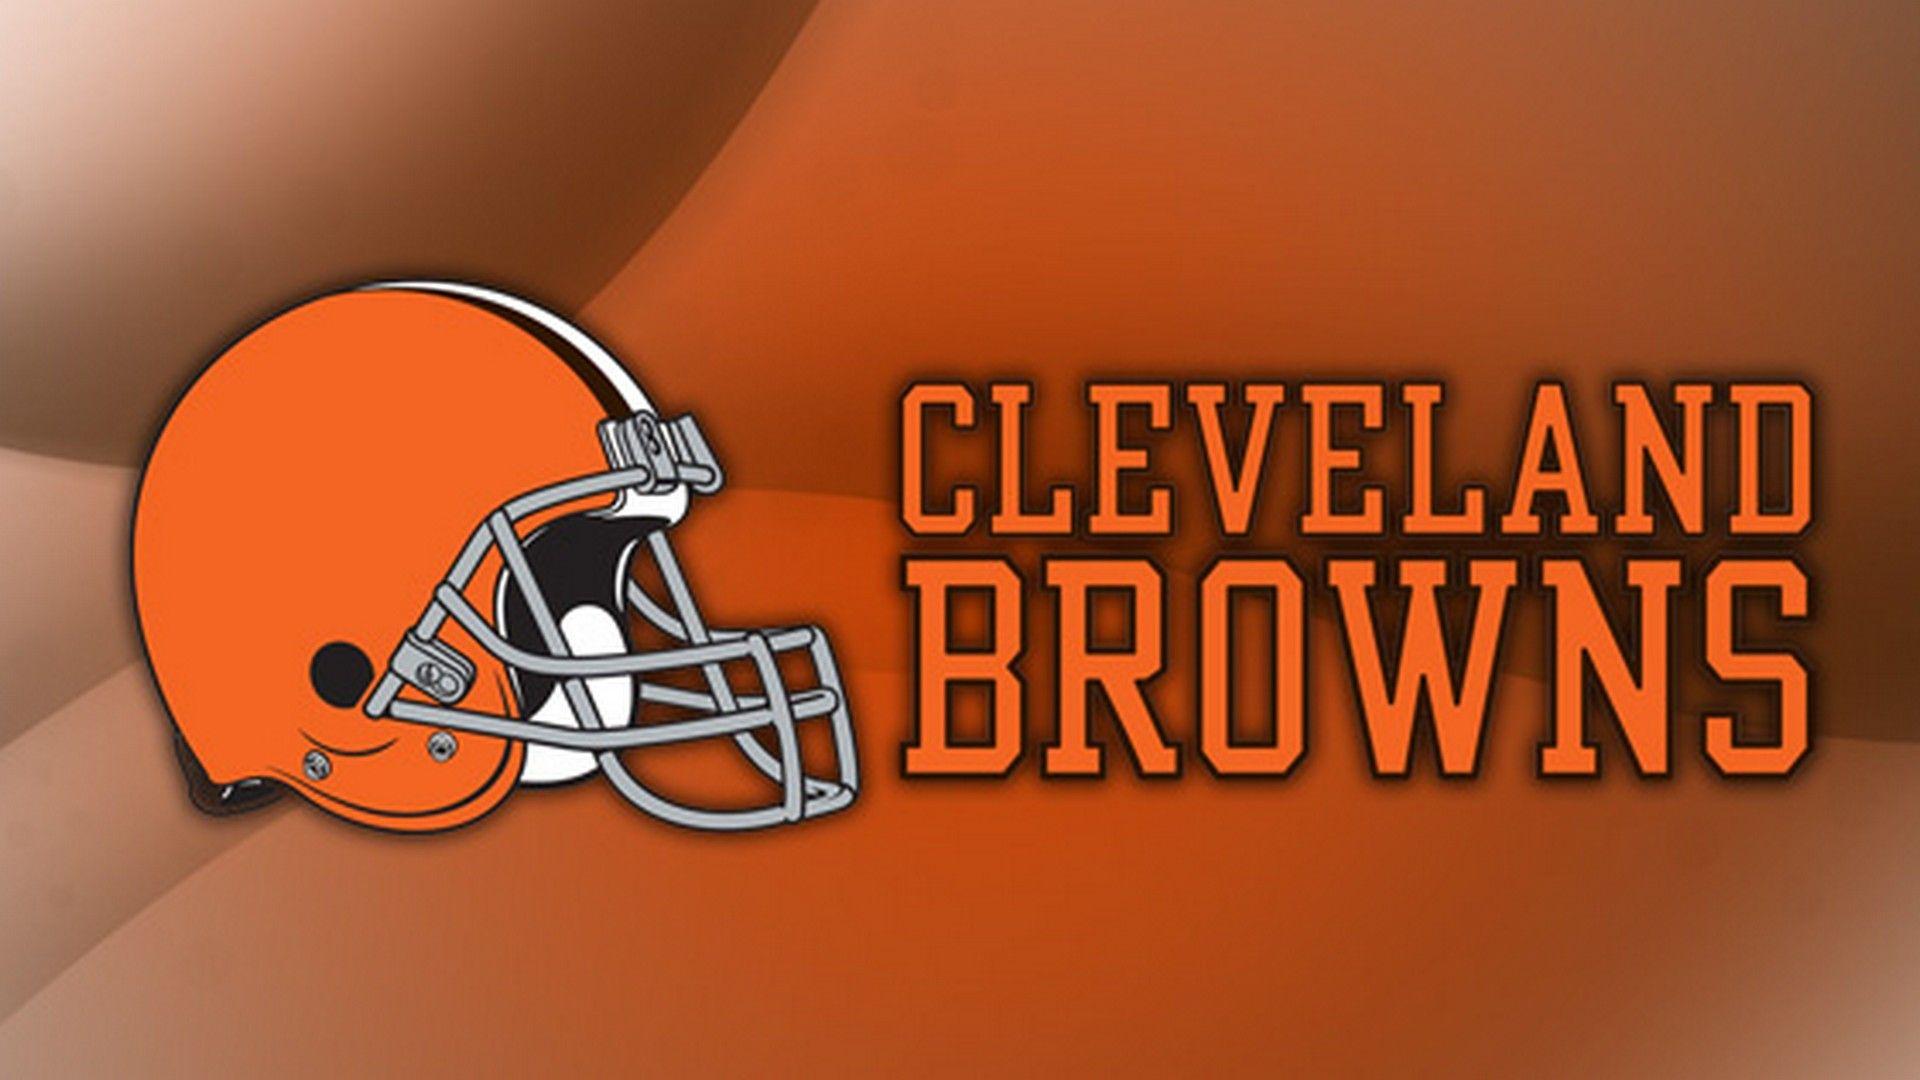 HD Background Cleveland Browns NFL Football Wallpaper